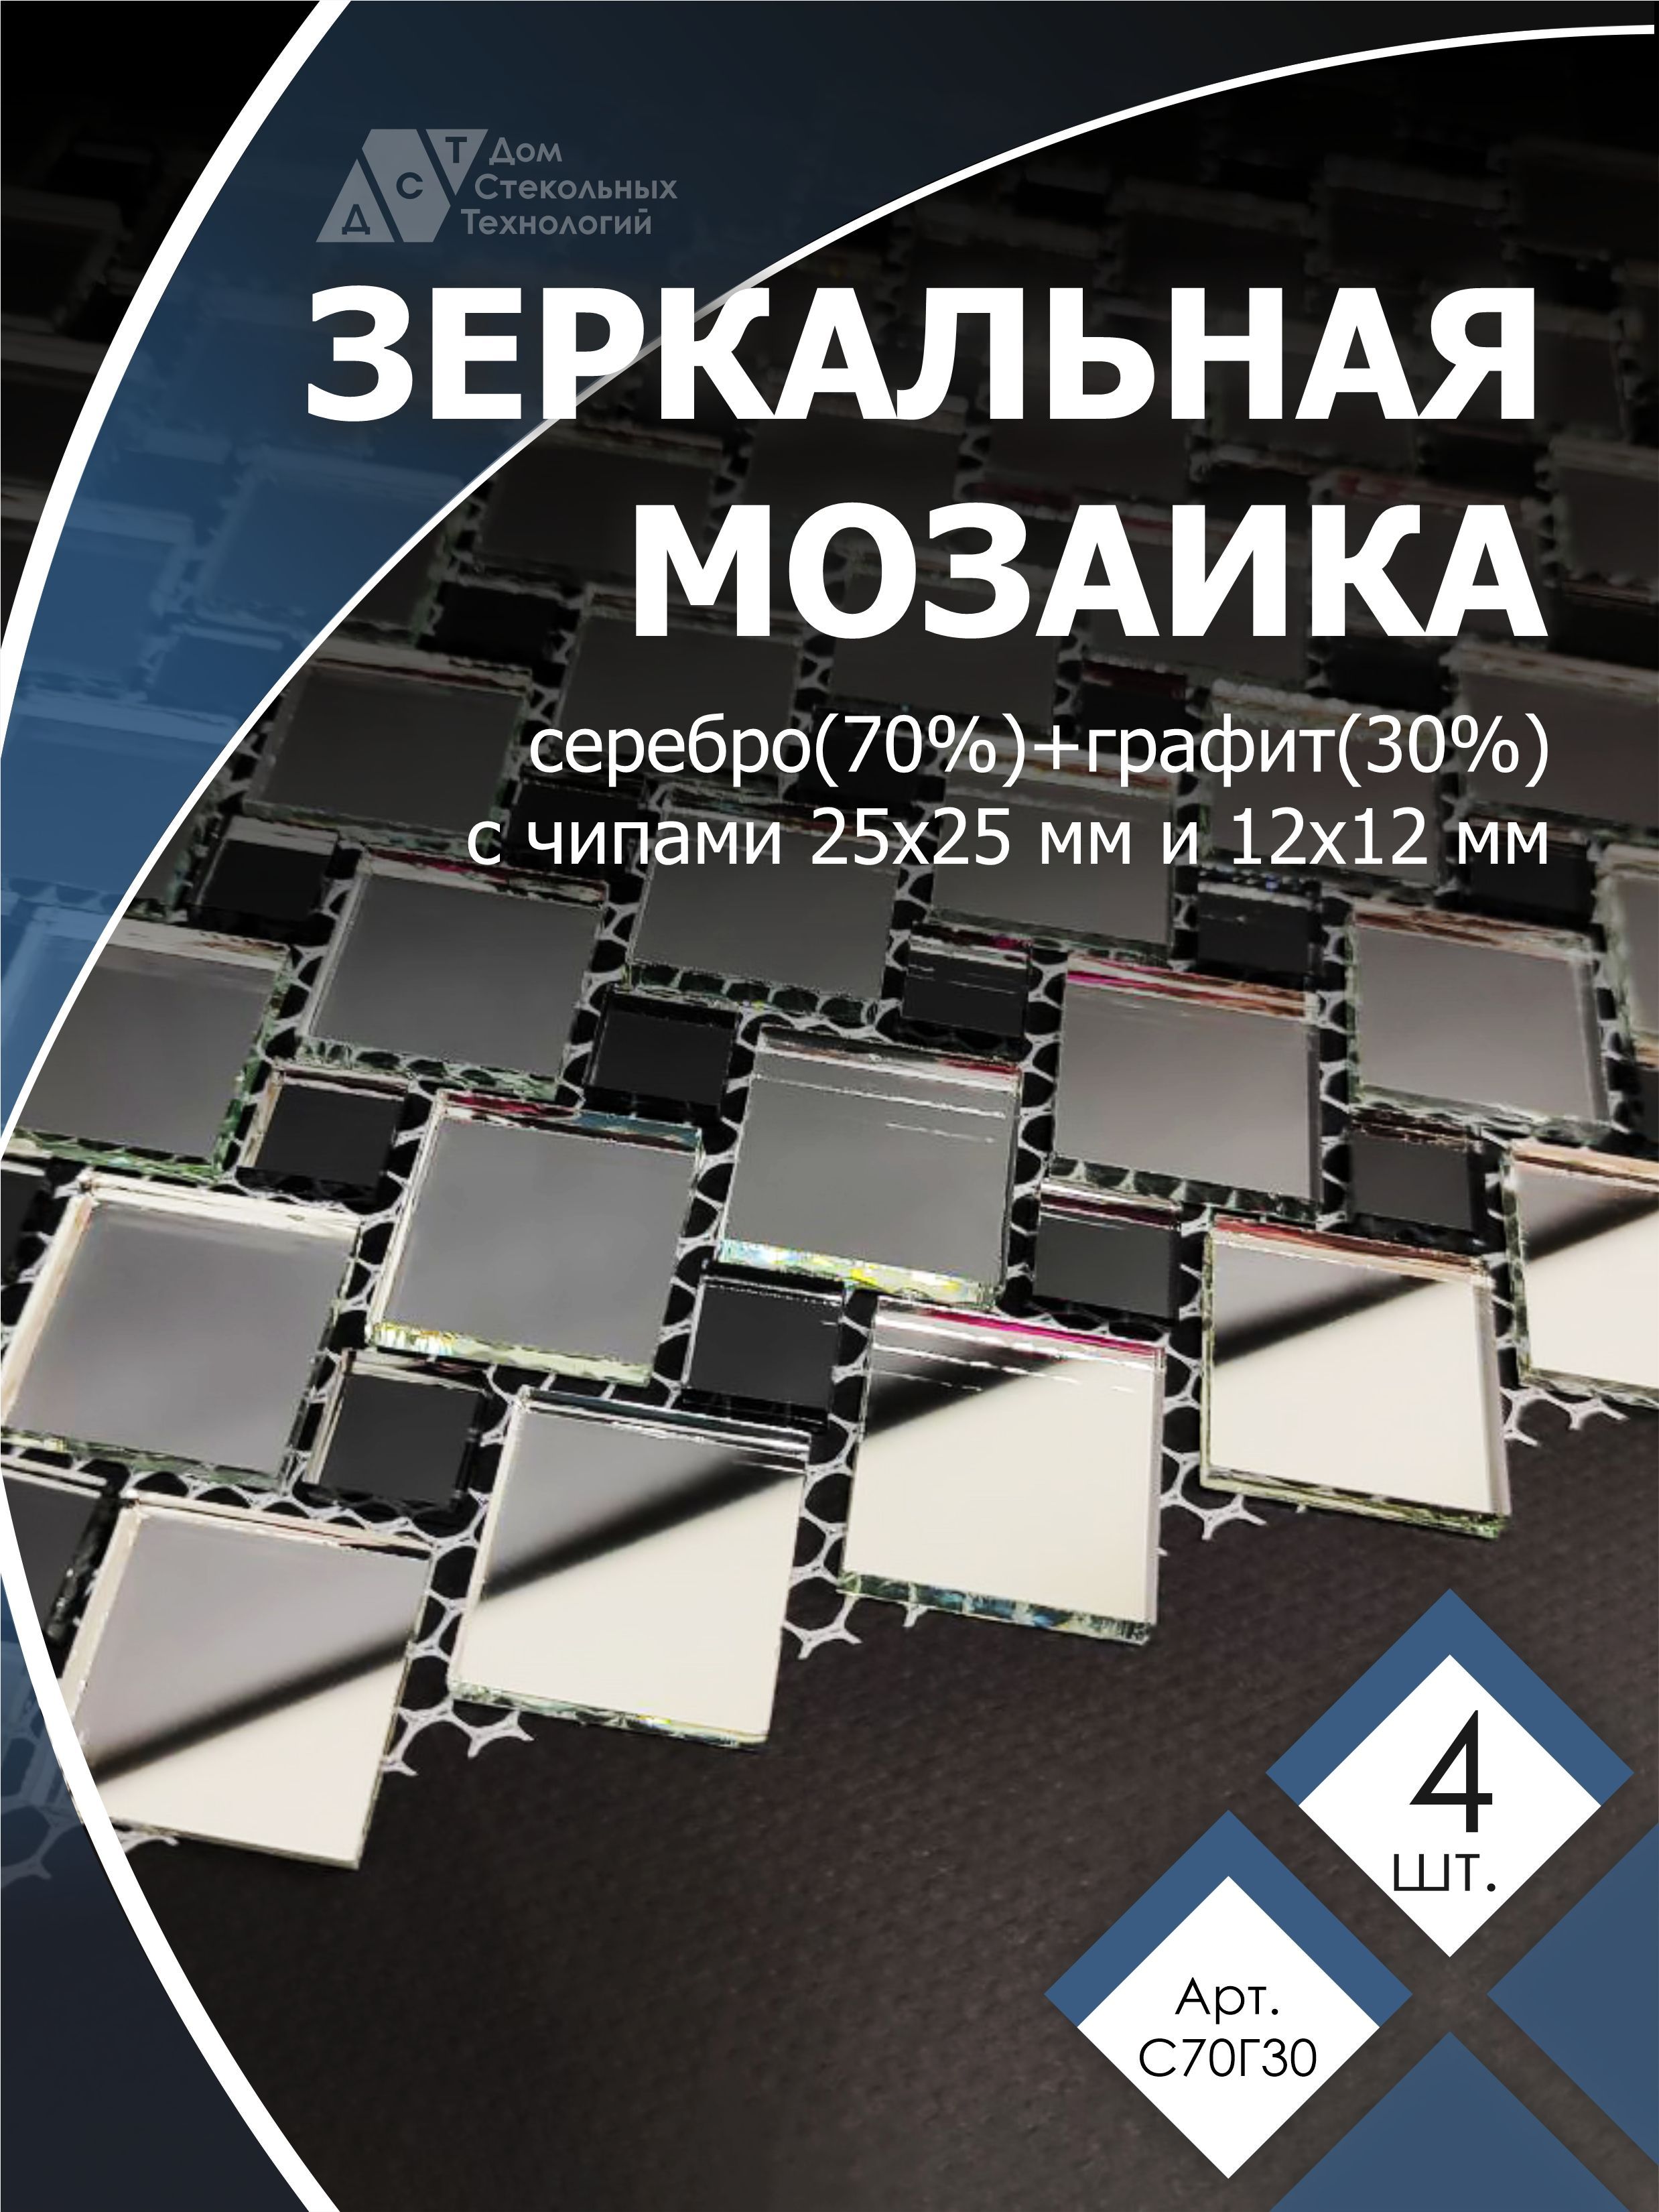 Зеркальная мозаика на сетке, ДСТ, 300х300 мм, серебро 70%, графит 30% (4 листов)